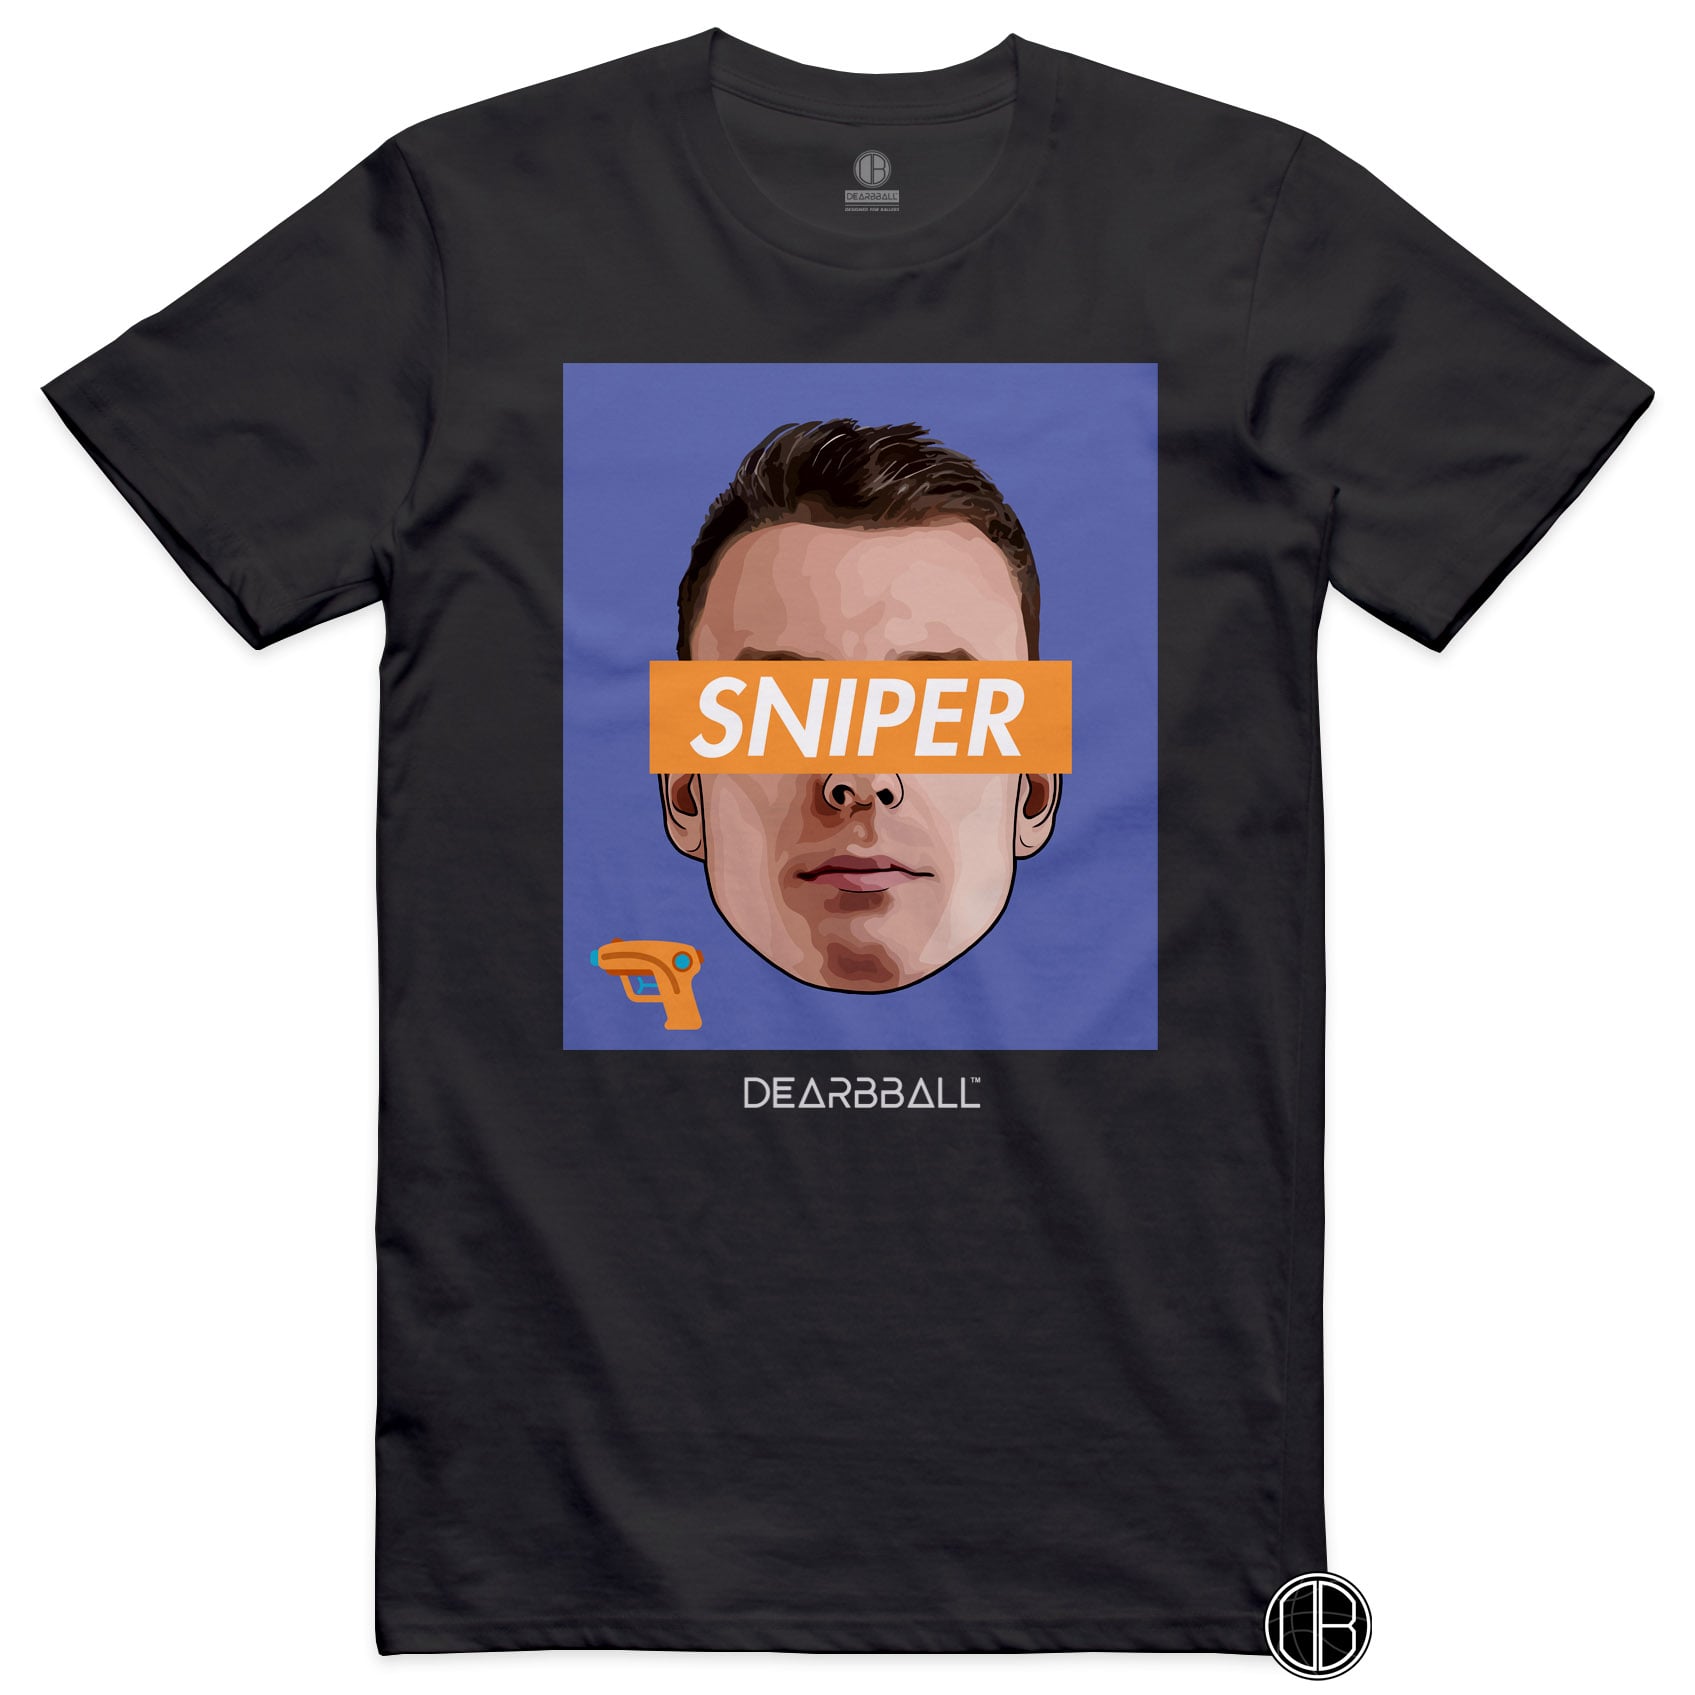 DearBBall T-Shirt - SNIPER Orange Edition